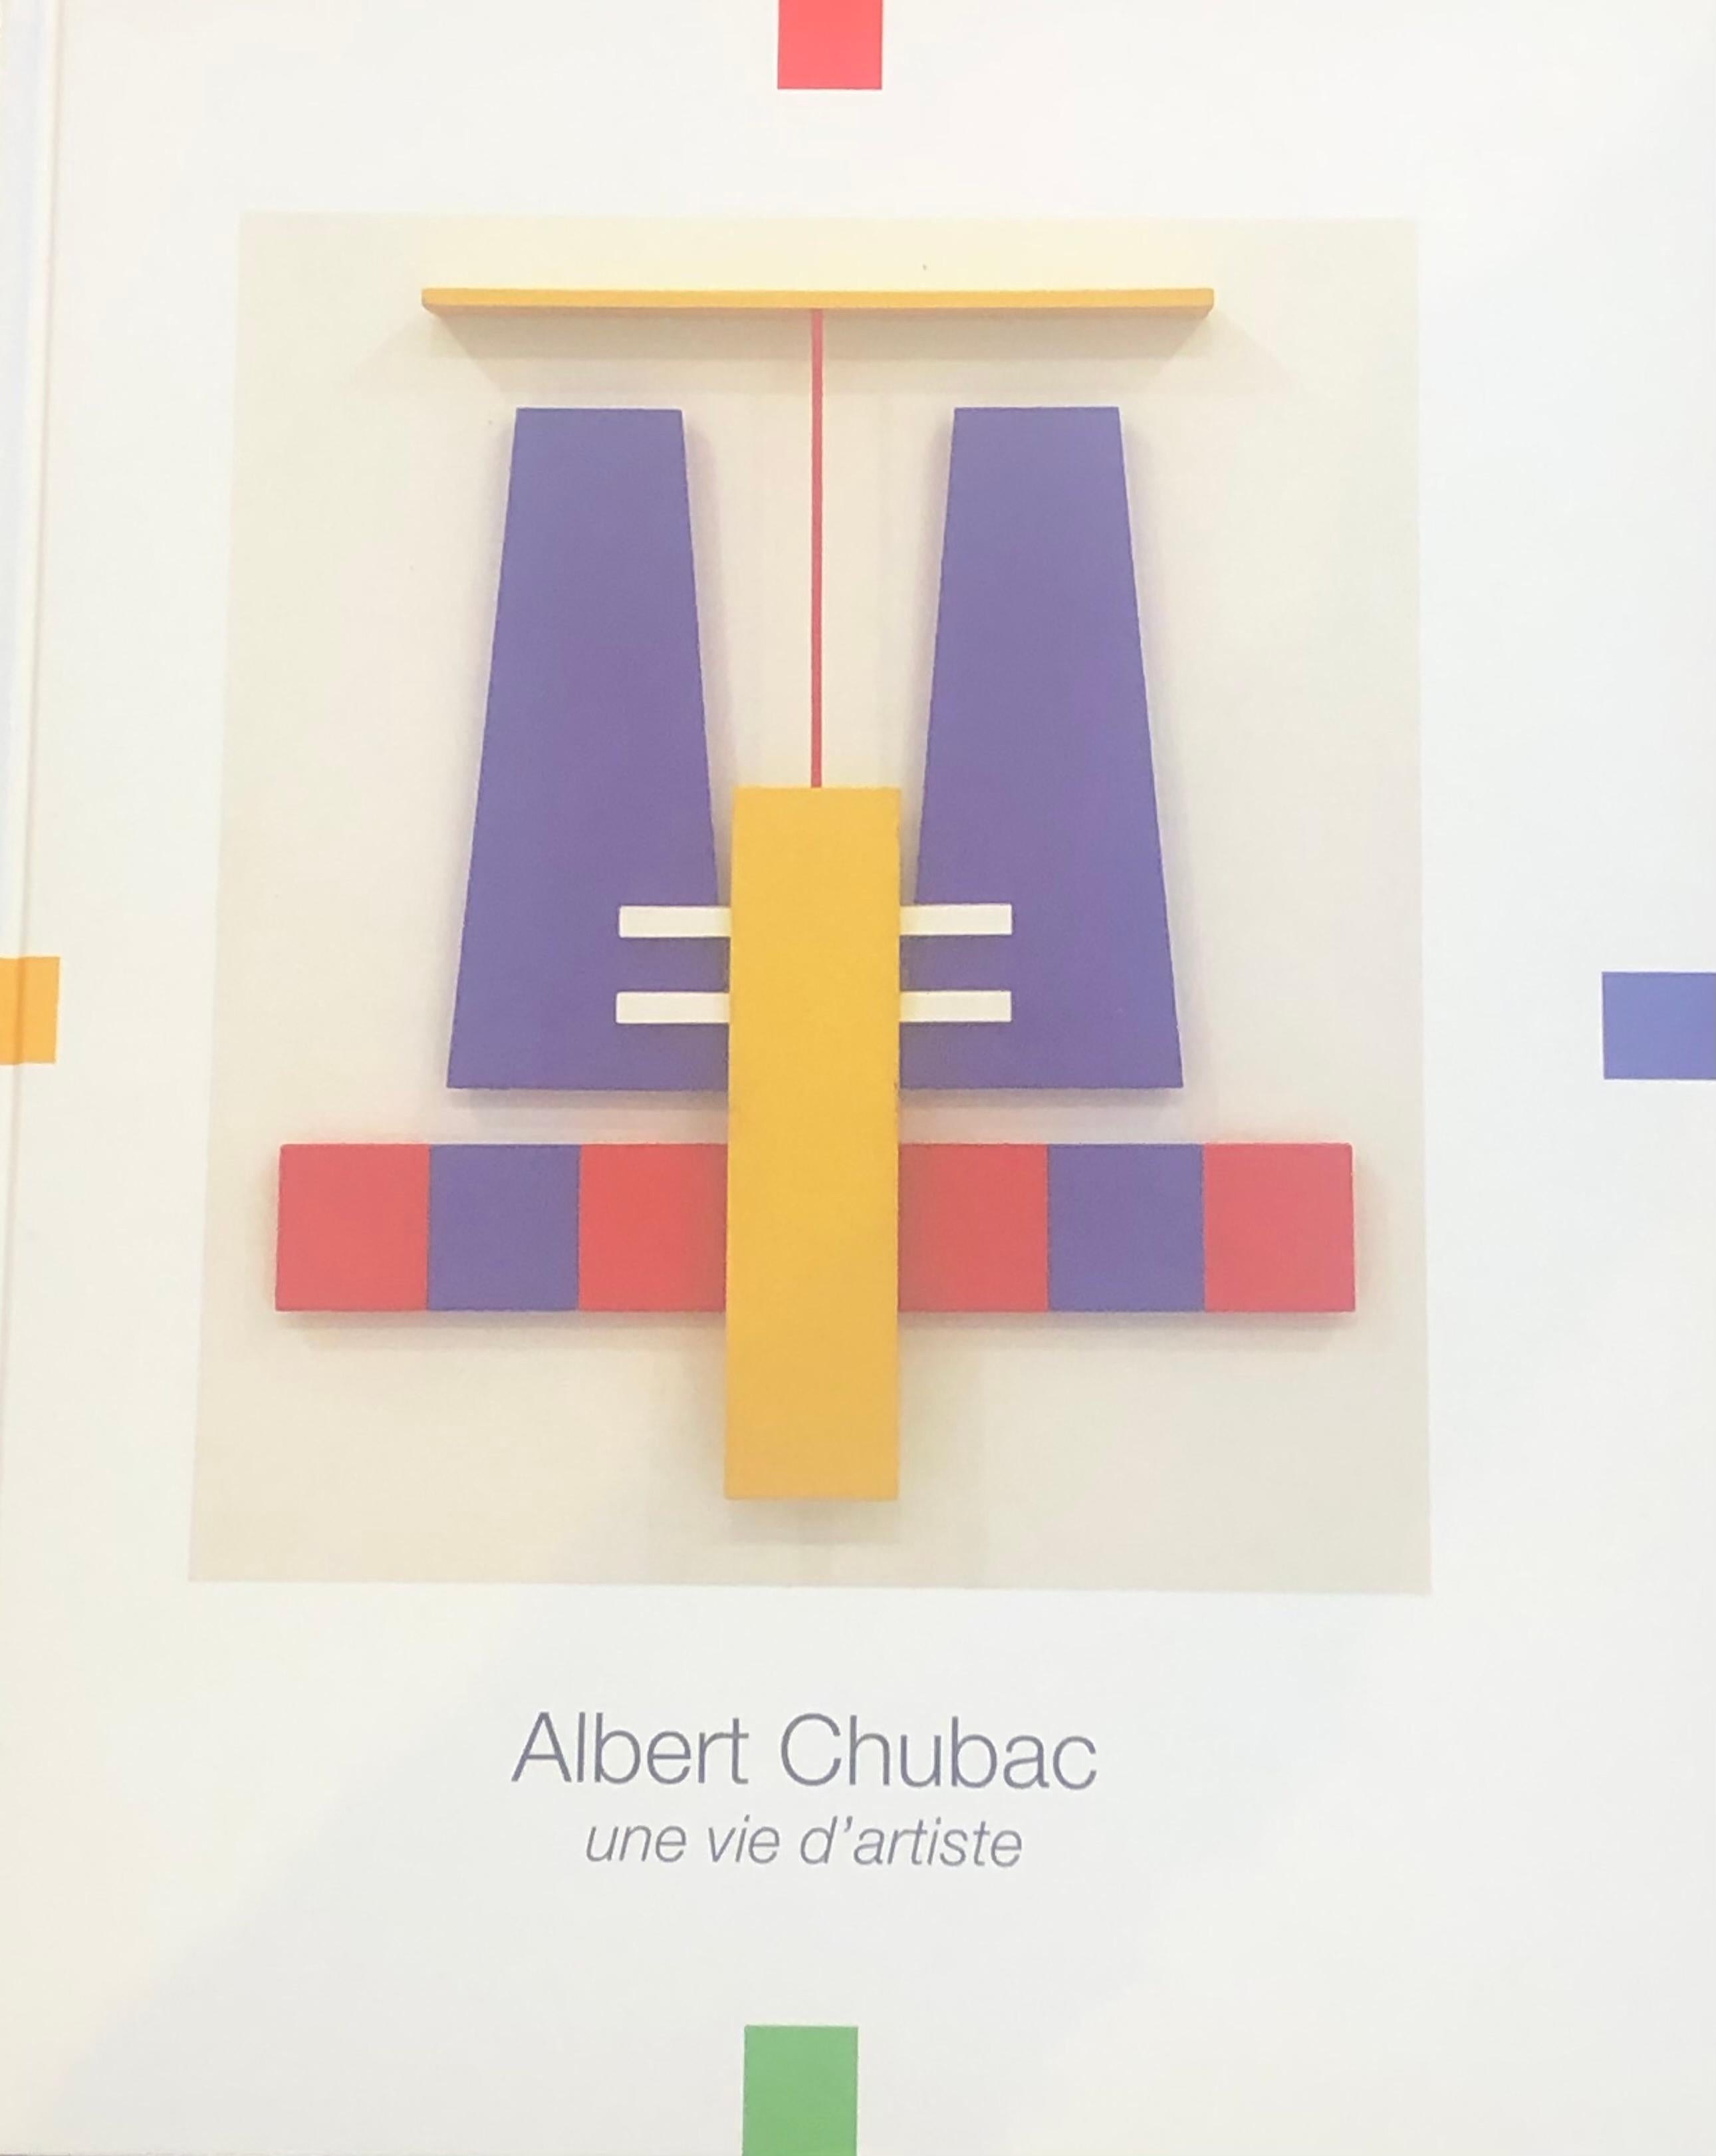 Albert Chubac, Skulptur, 